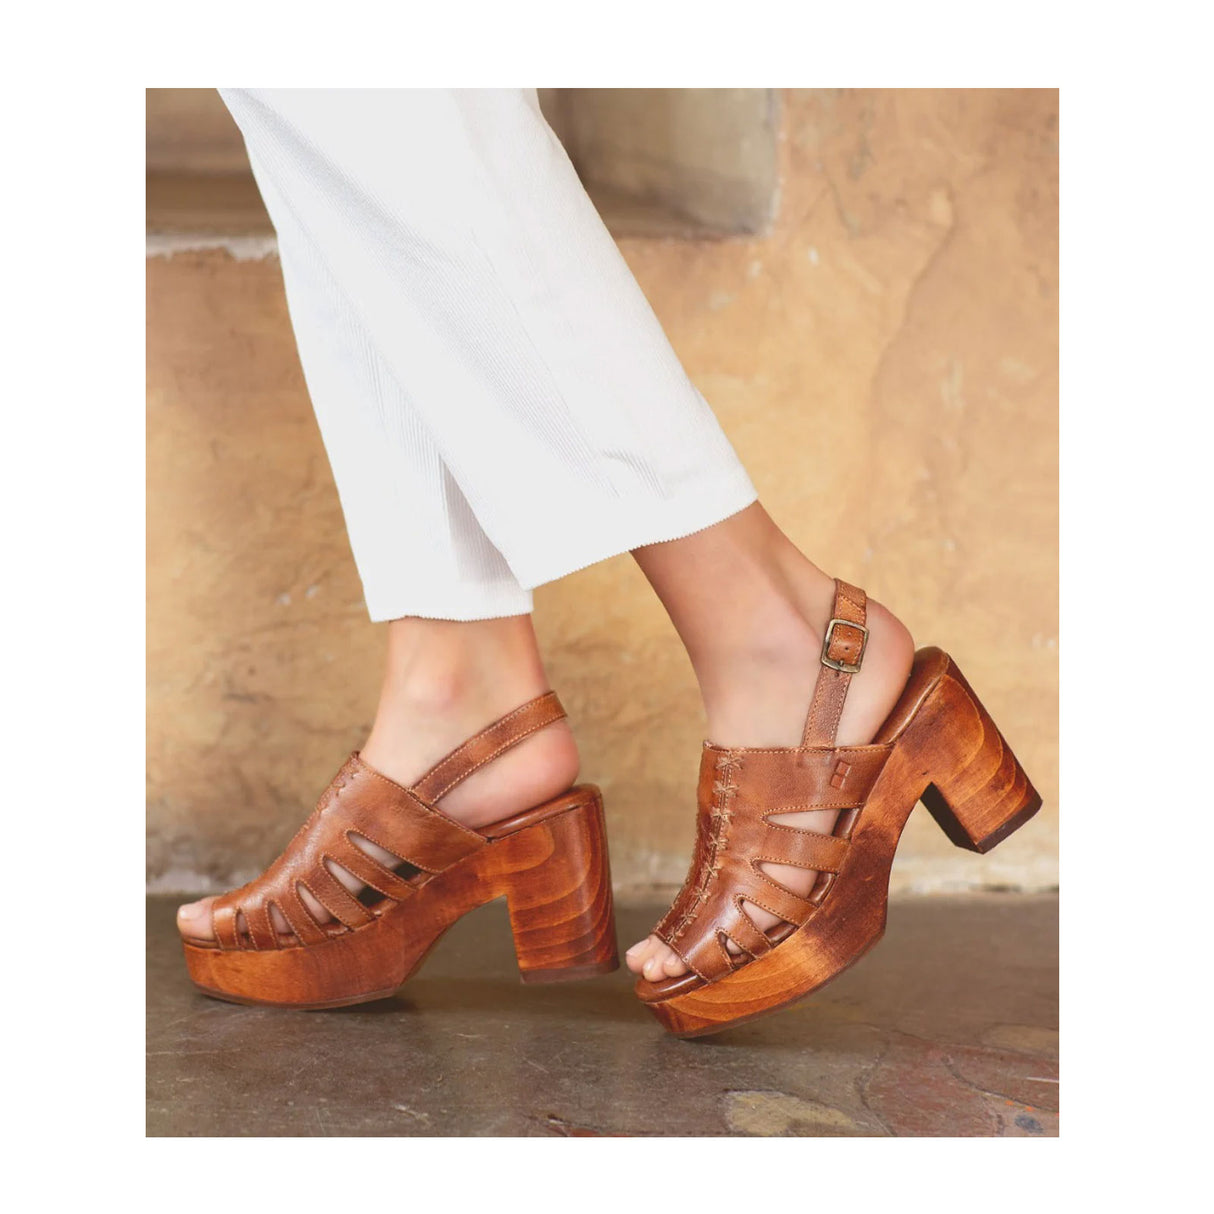 Bed Stu Fontella Heeled Sandal (Women) - Tan Rustic Sandals - Heel/Wedge - The Heel Shoe Fitters